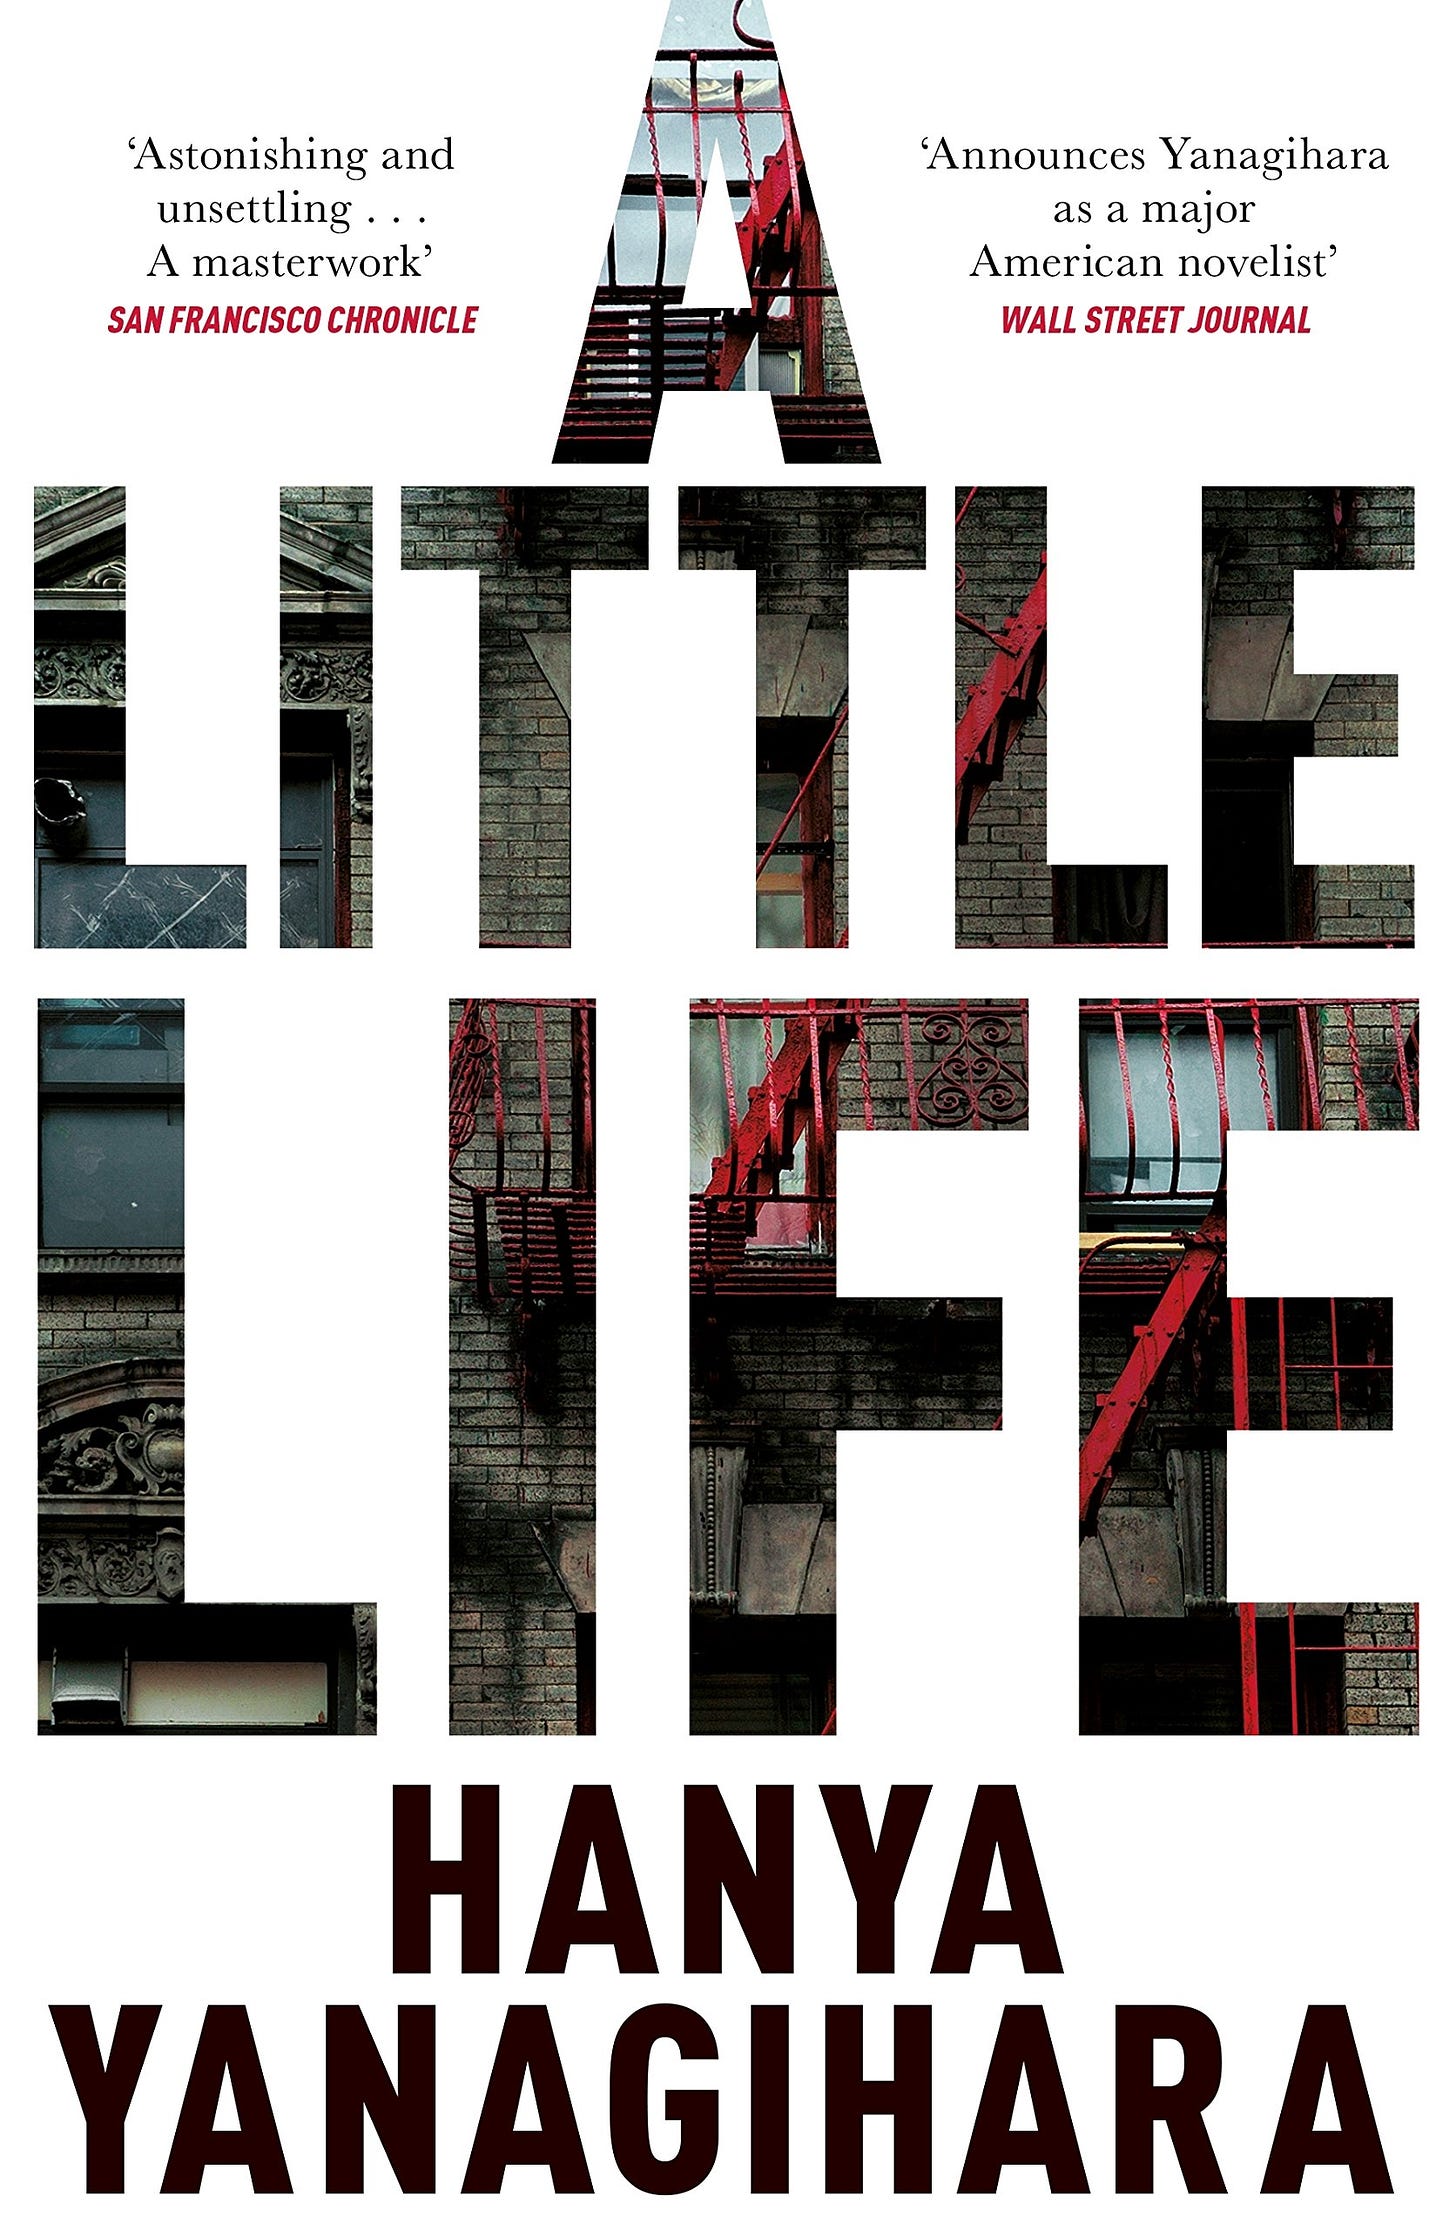 A Little Life: The Million-Copy Bestseller: Amazon.co.uk: Yanagihara,  Hanya: 9781447294818: Books